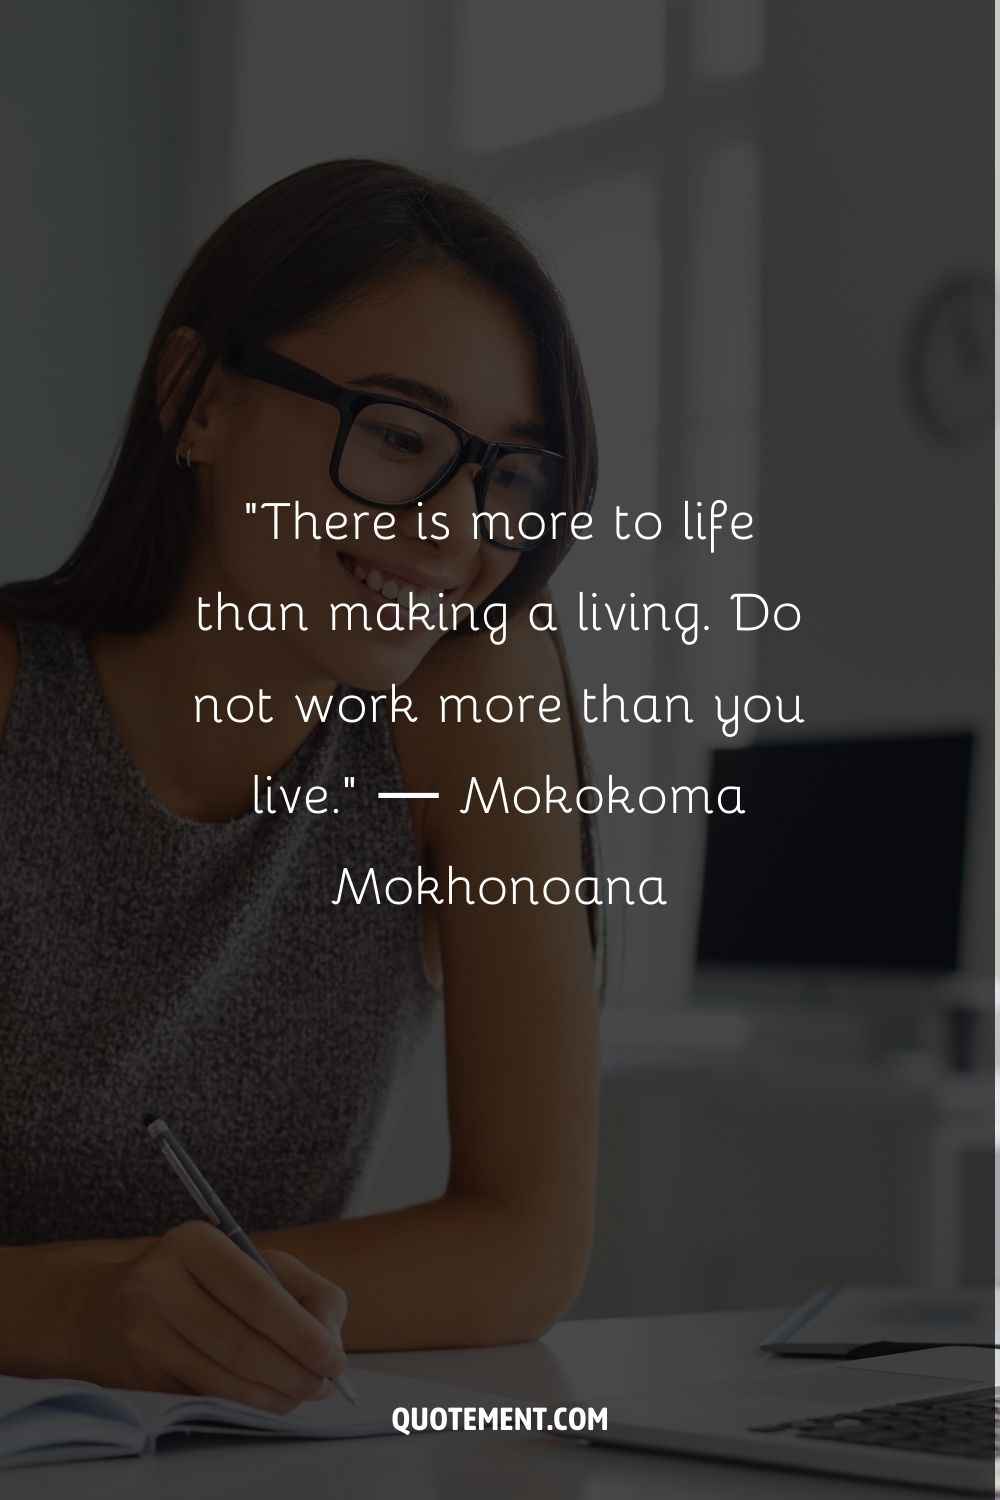 “There is more to life than making a living. Do not work more than you live.” ― Mokokoma Mokhonoana